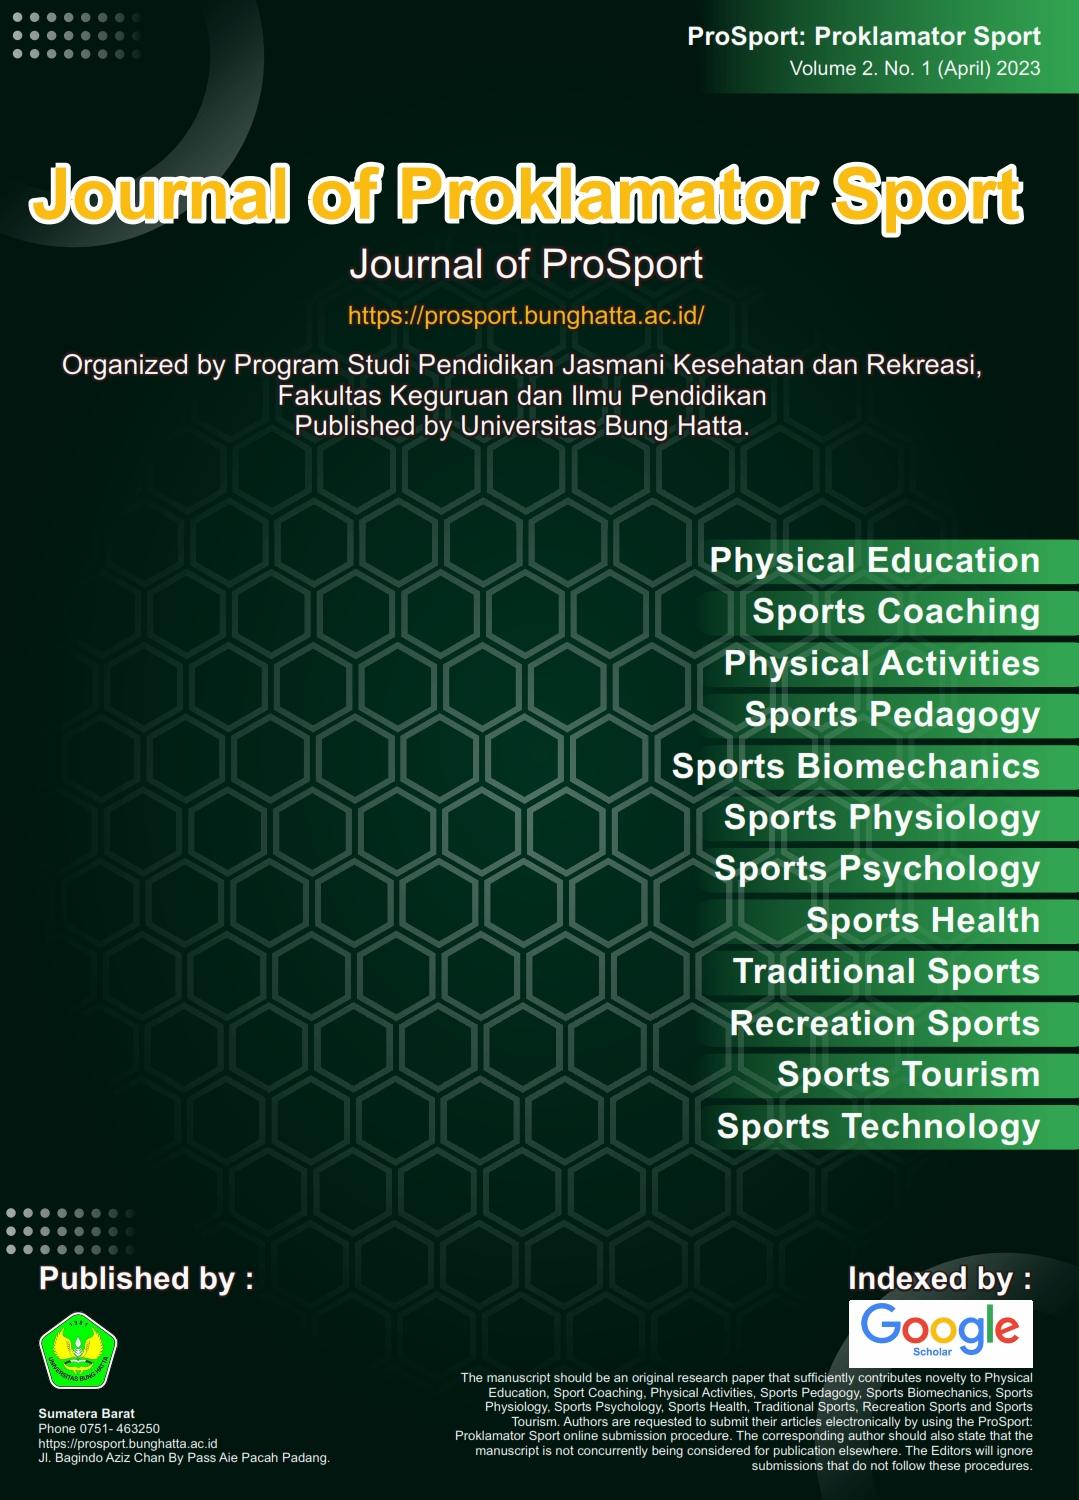 ProSport : Proklamator Sport, Volume 1 No 2 (November) 2022